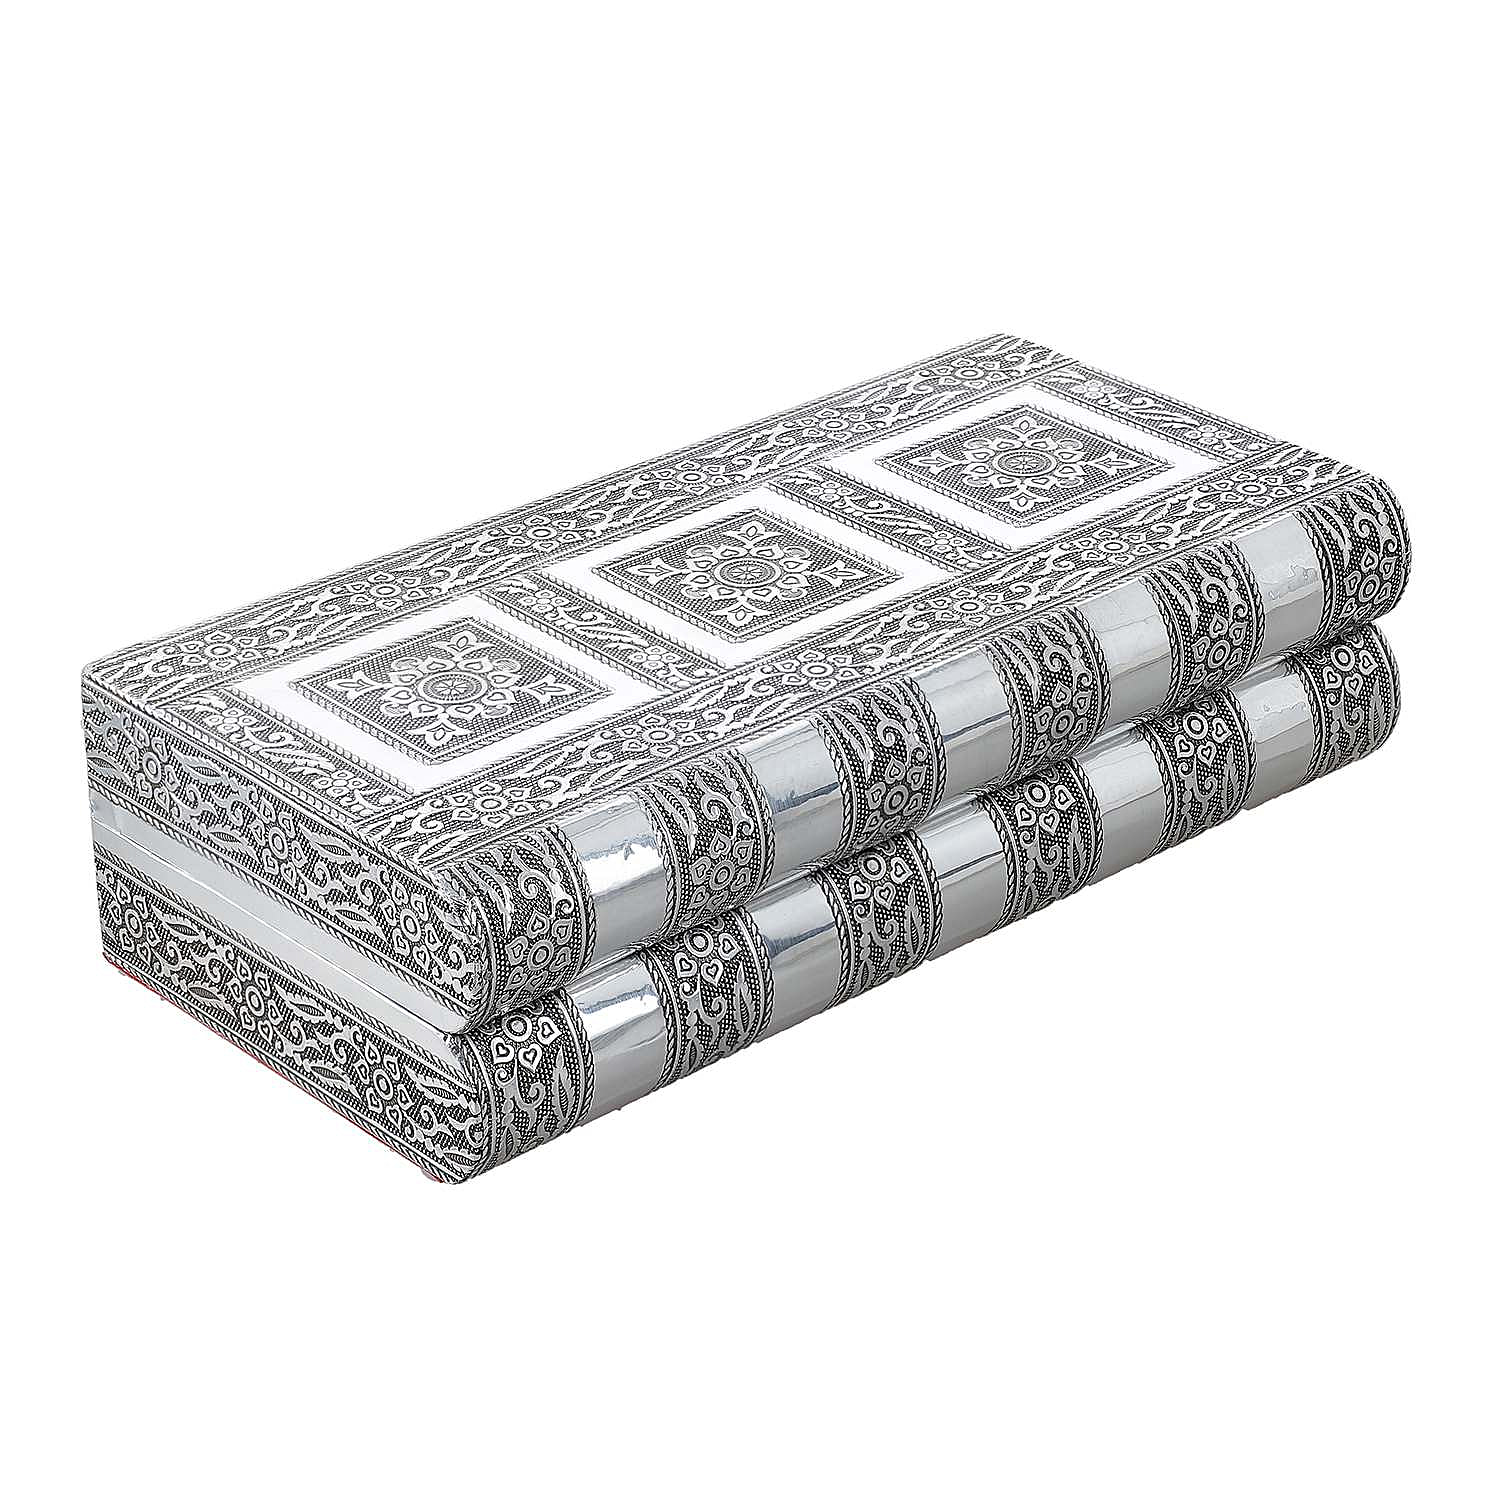 Handcrafted Oxidized Aluminium Storage/Jewelry Box with Mirror - Silver